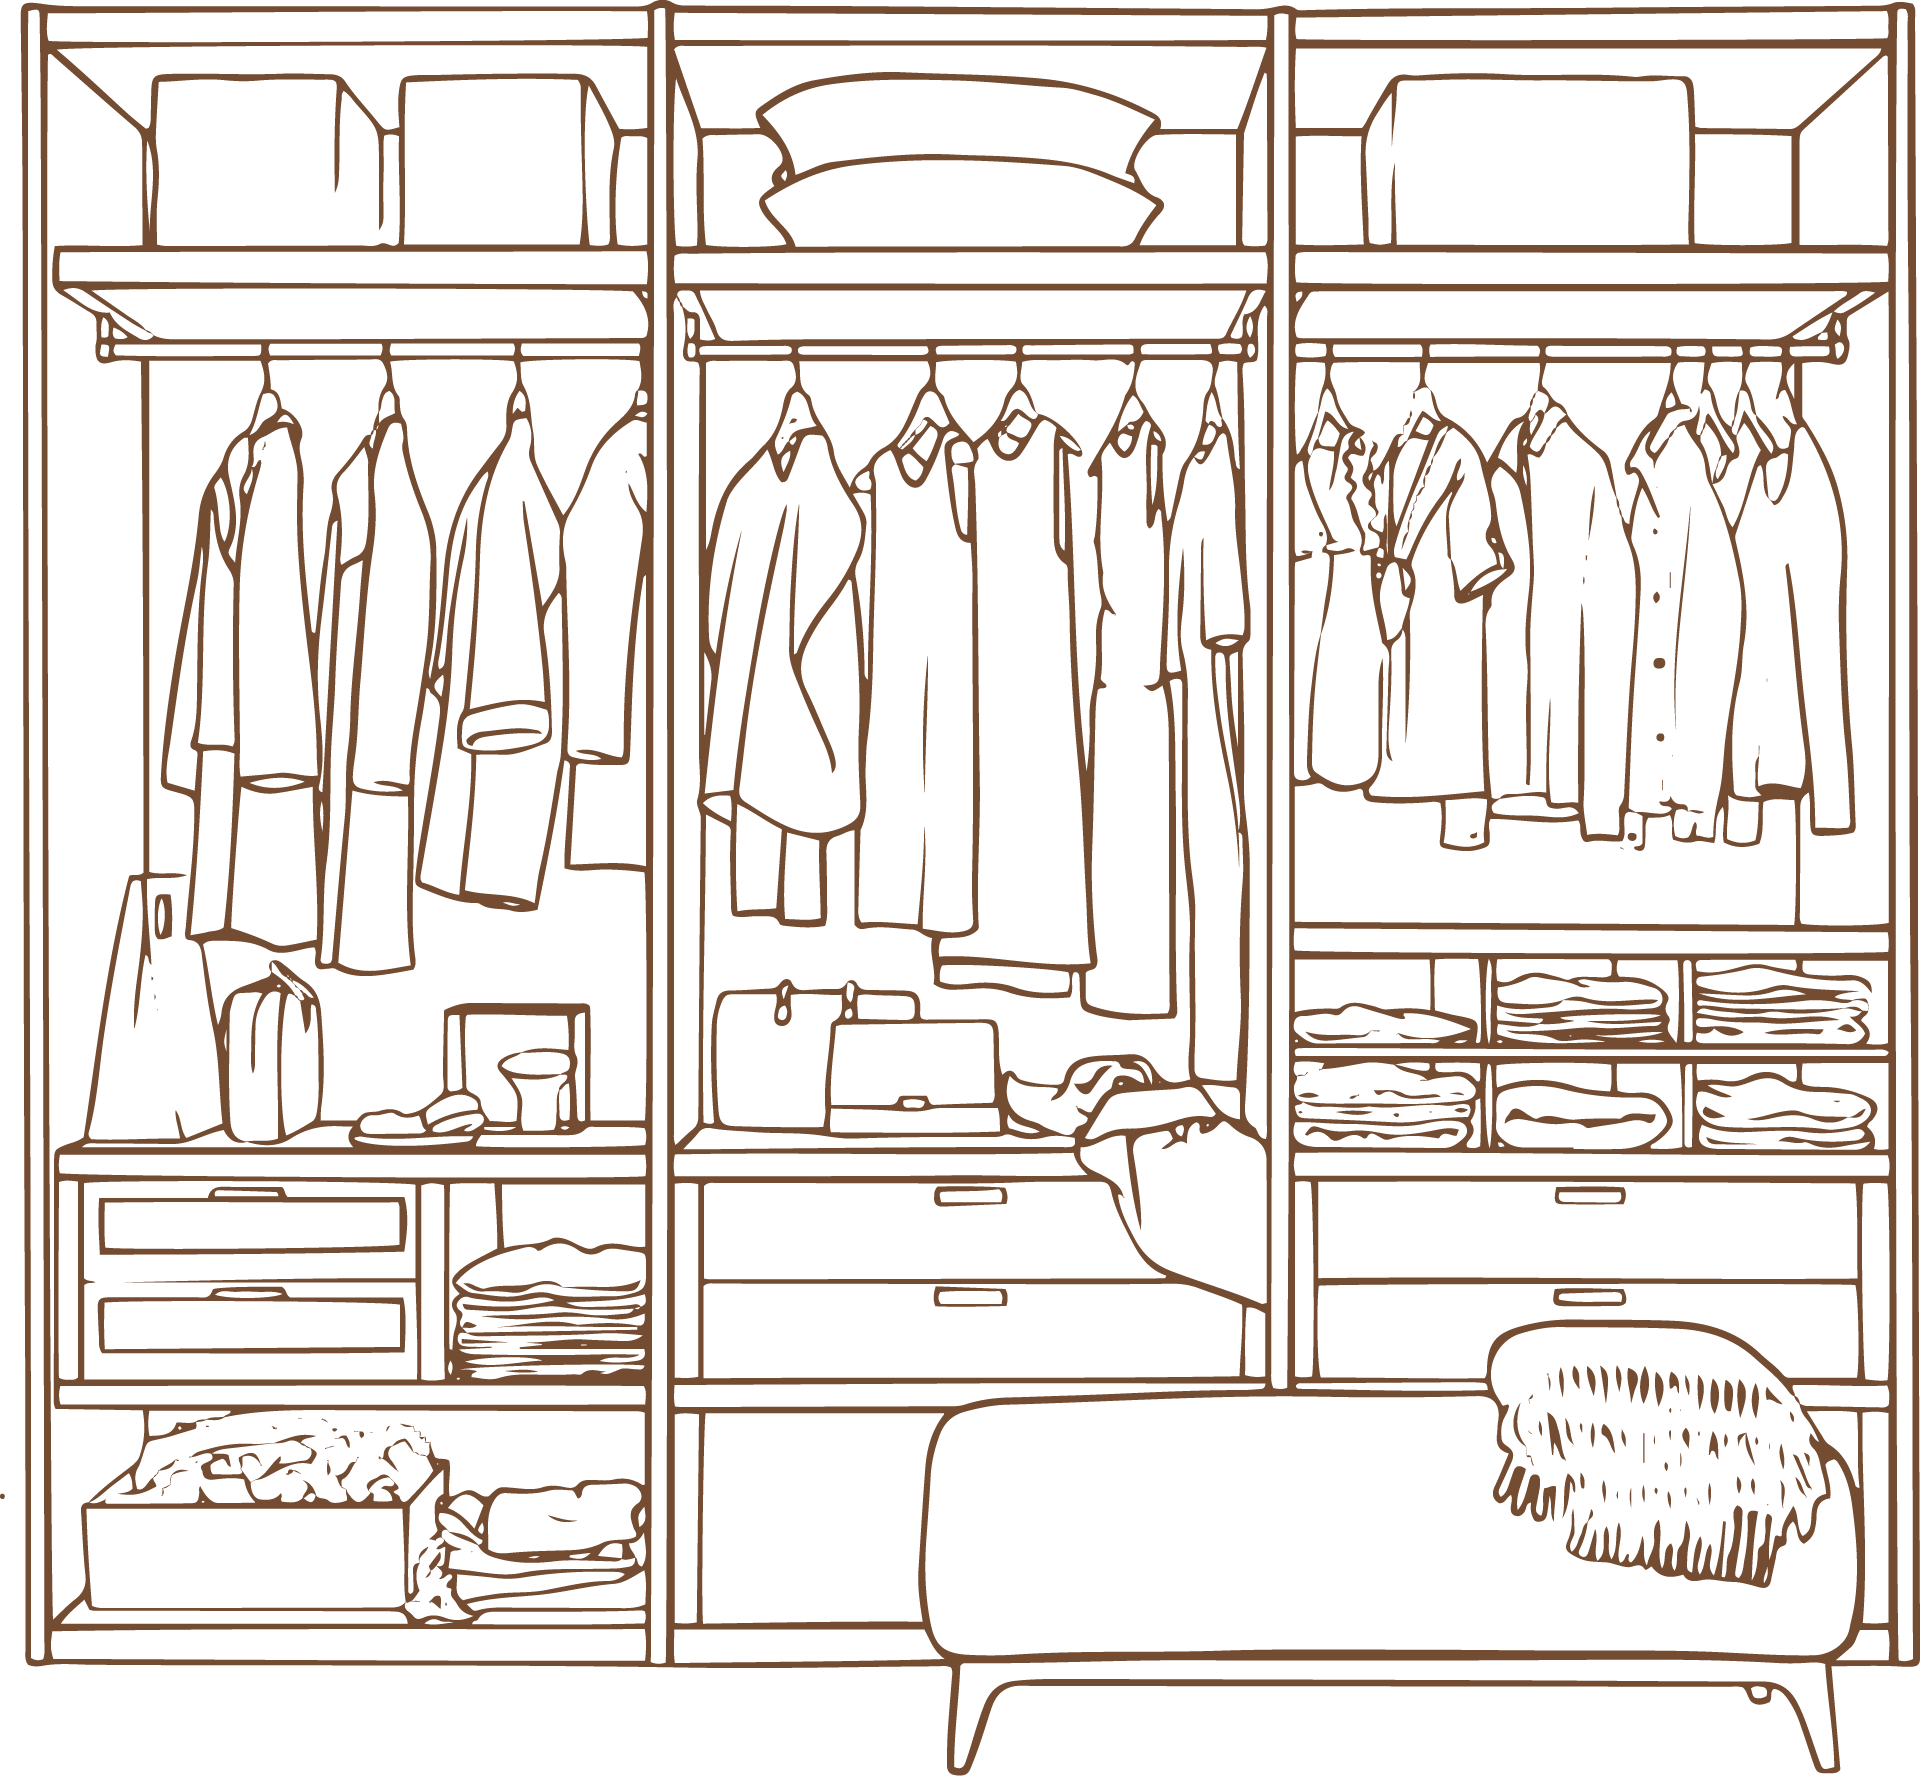 Illustration of an organized closet